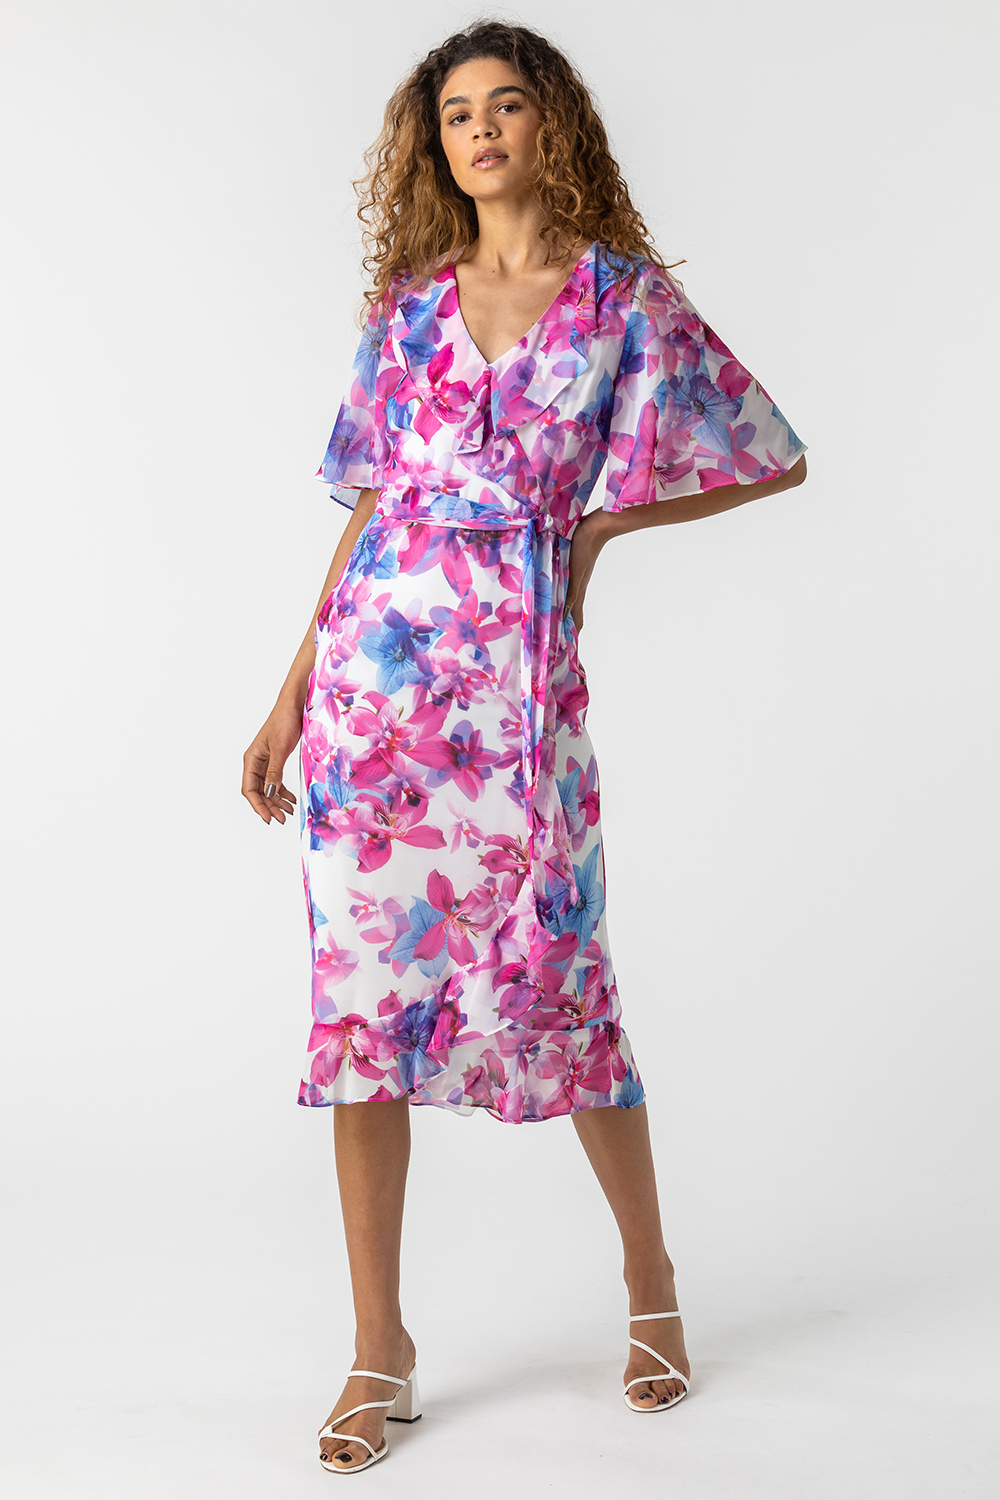 Floral Print Frill Wrap Dress in Pink - Roman Originals UK